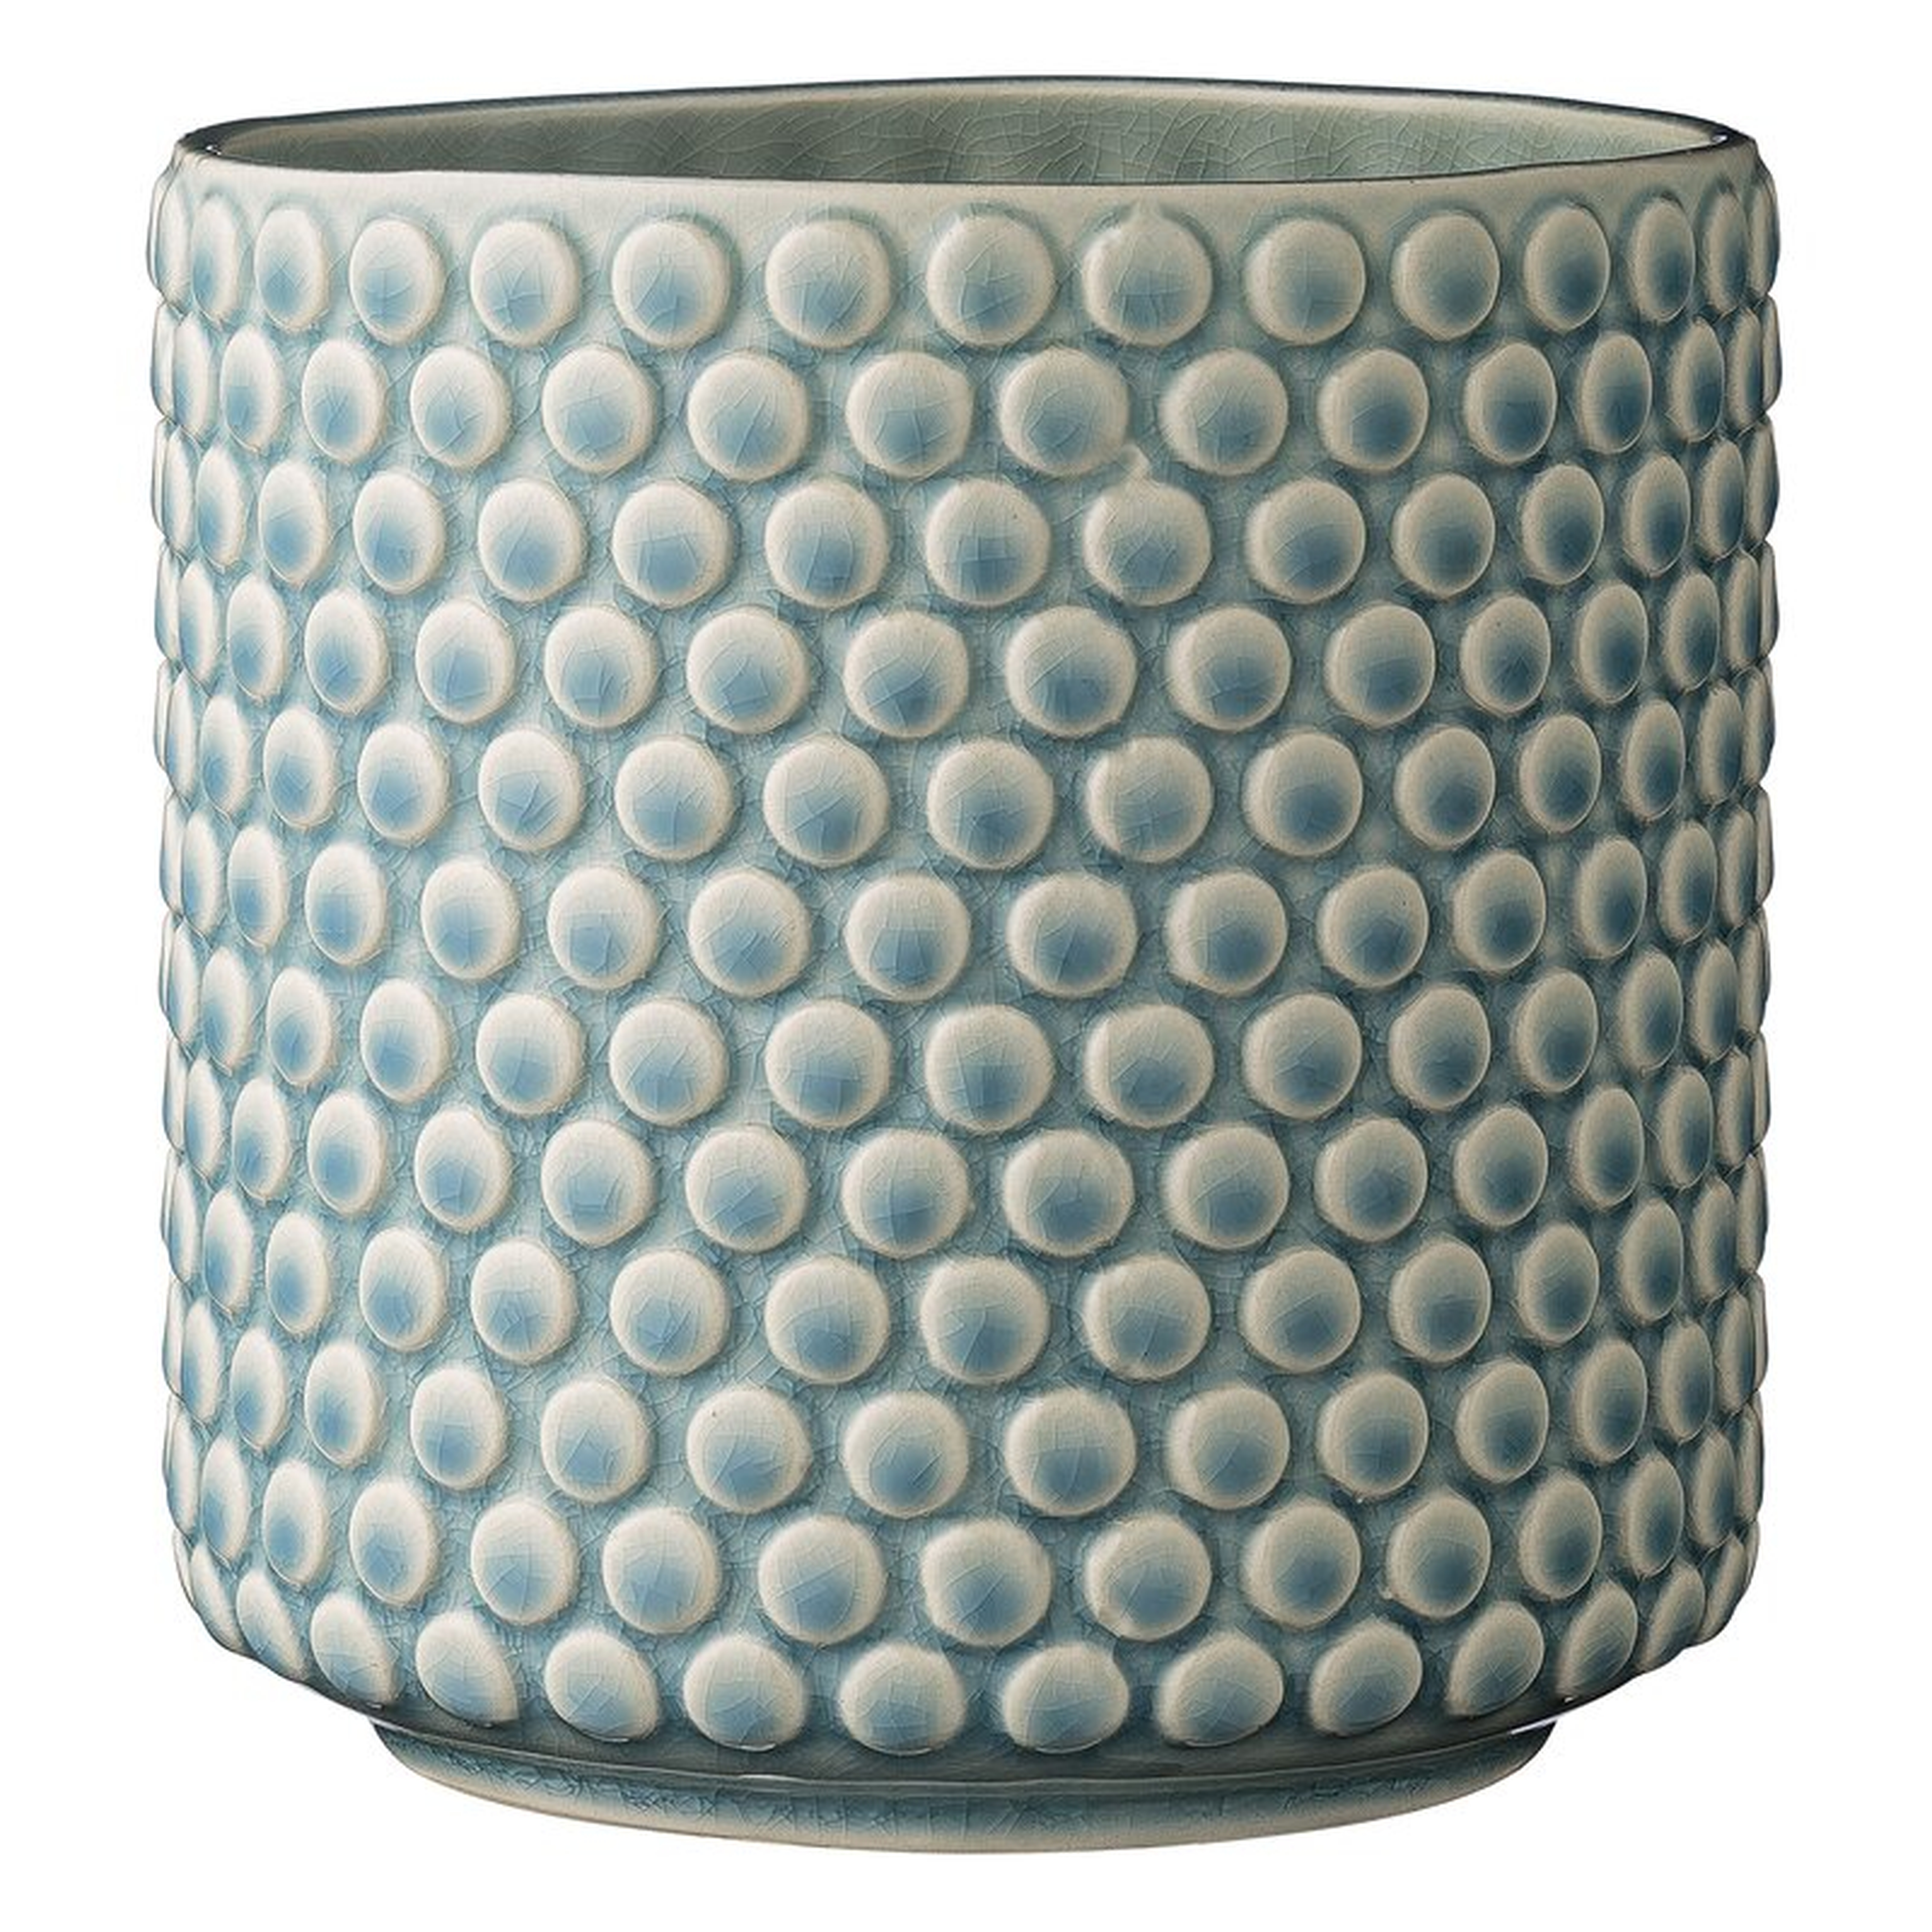 Bloomingville Ceramic Pot Planter Color: Sky Blue - Perigold